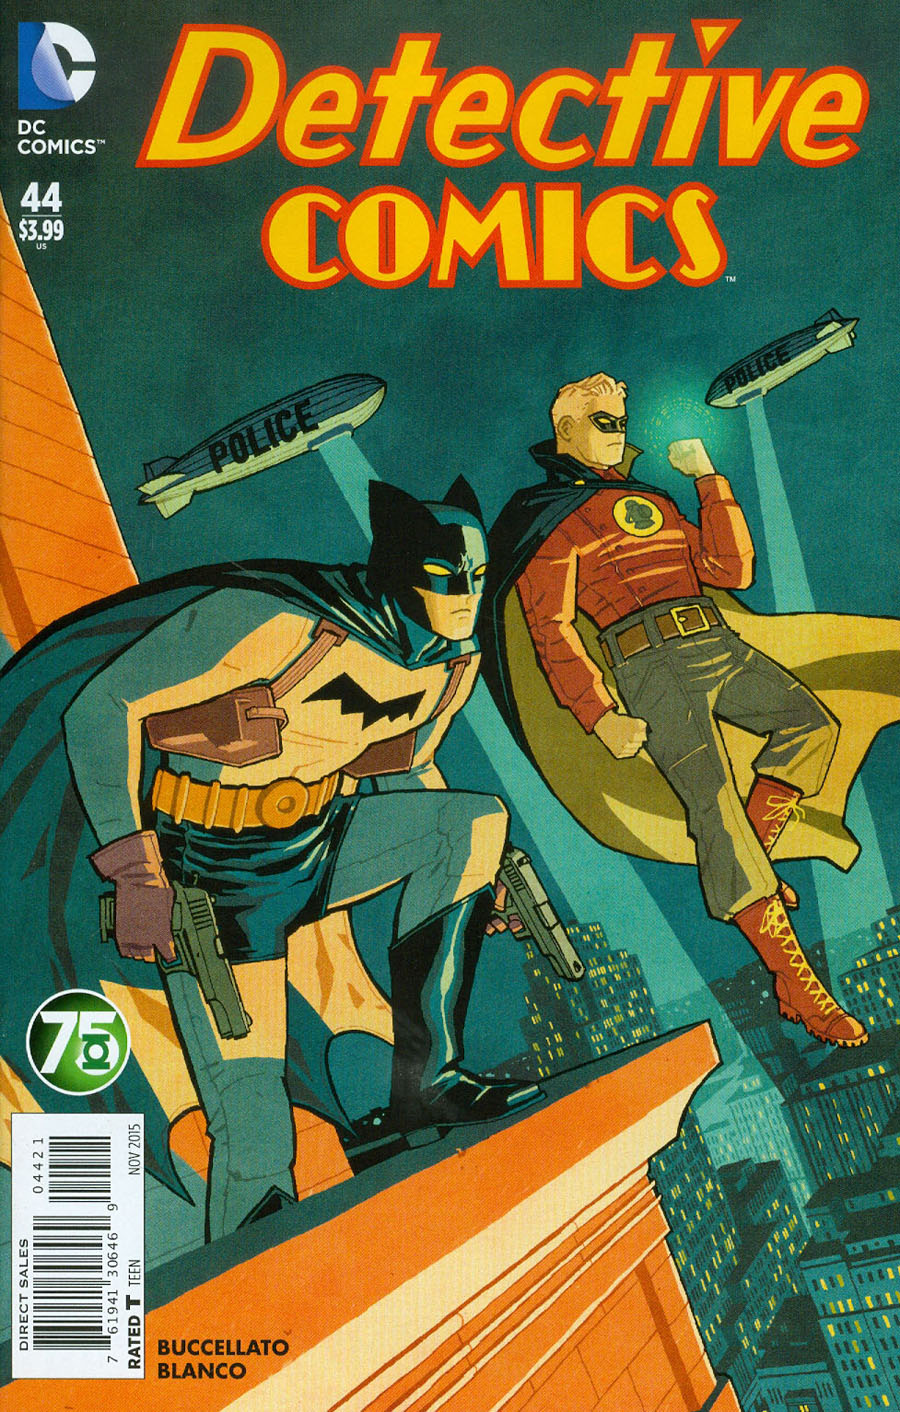 Detective Comics Vol 2 #44 Cover B Variant Cliff Chiang Green Lantern 75th Anniversary Cover